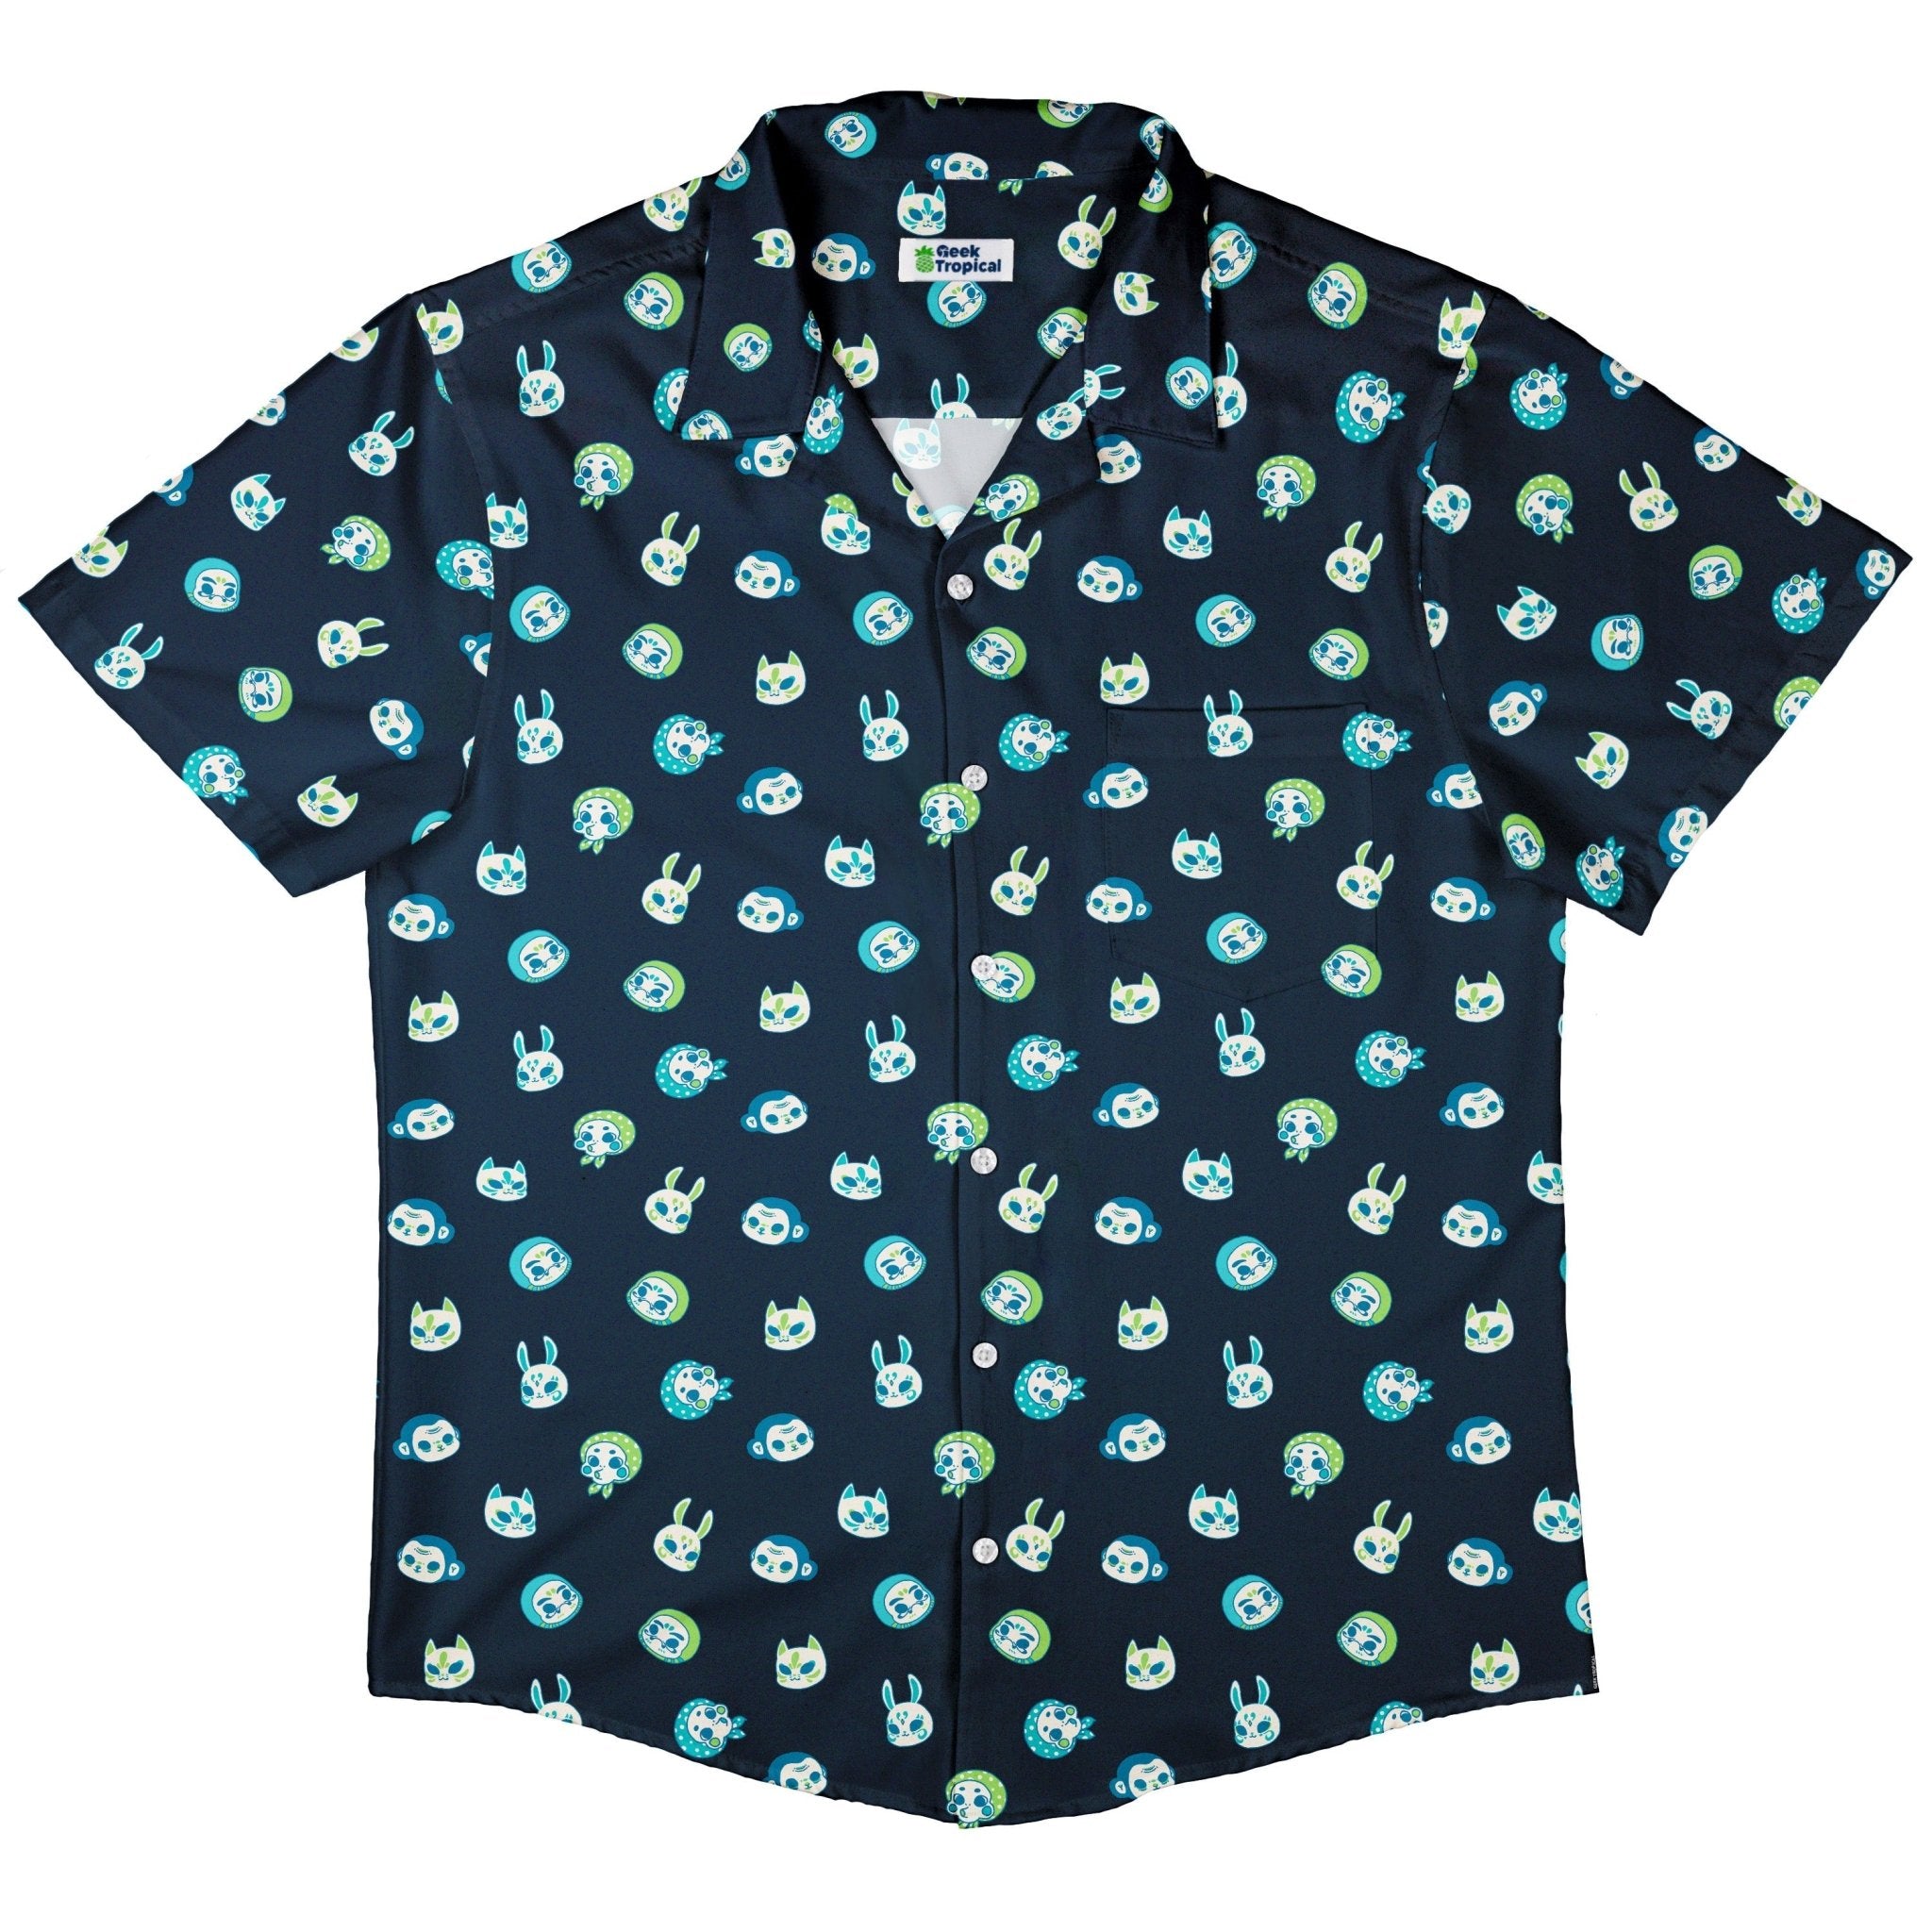 Kawaii Masks Parade Blue Night Button Up Shirt - adult sizing - Anime - Design by Ardi Tong